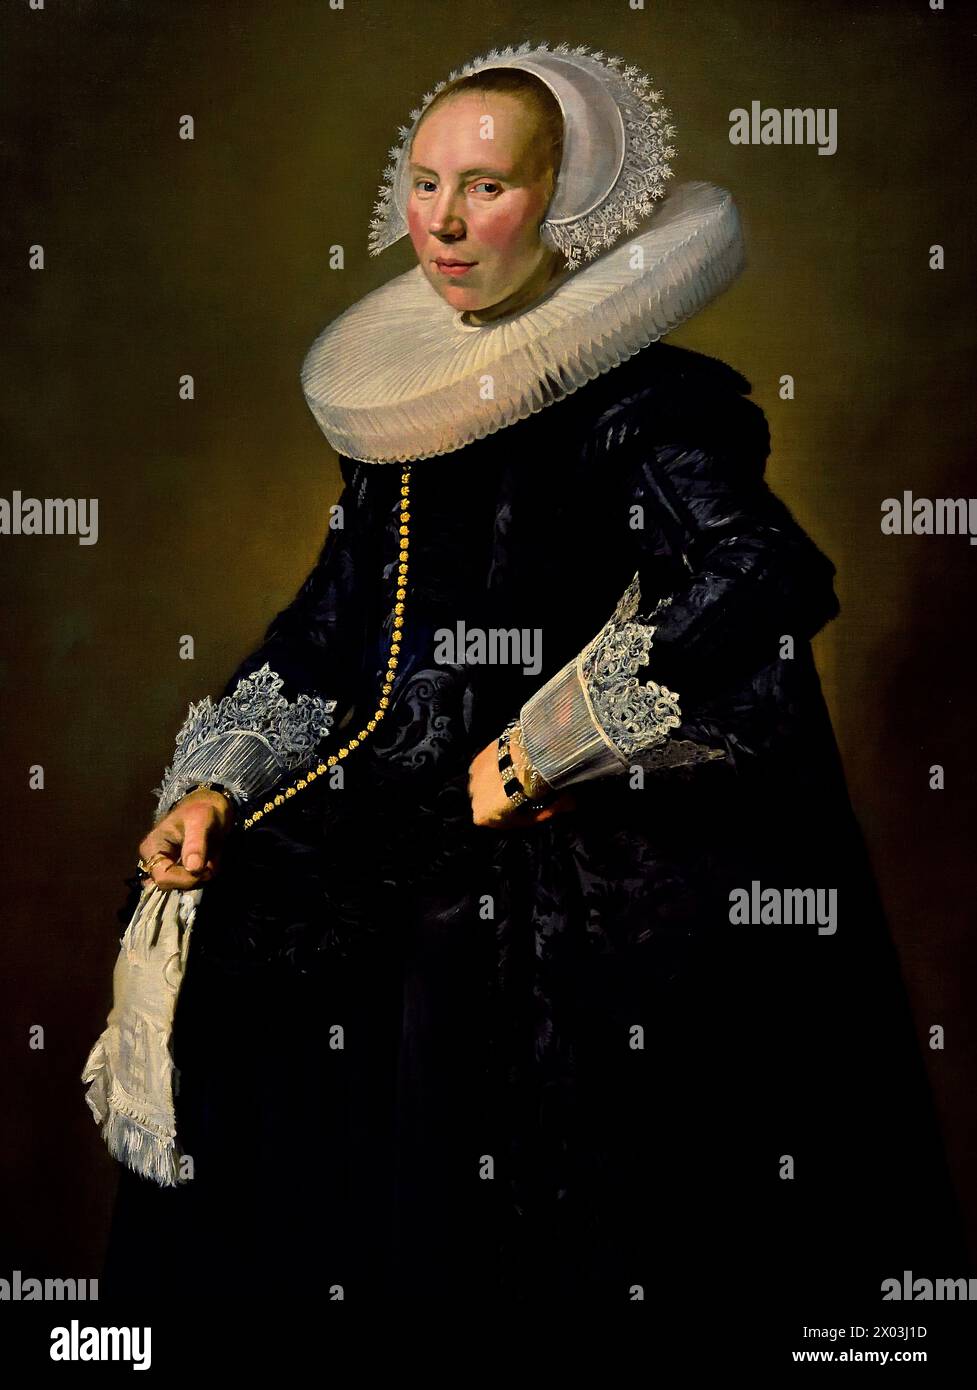 Portrait of a woman, probably Cunera van Baersdorp (1600-1640)  (c. 1625)  Frans Hals, 1582-1666, Antwerp- Haarlem,  Dutch, The Netherlands, 17th century, Dutch Golden Age Stock Photo